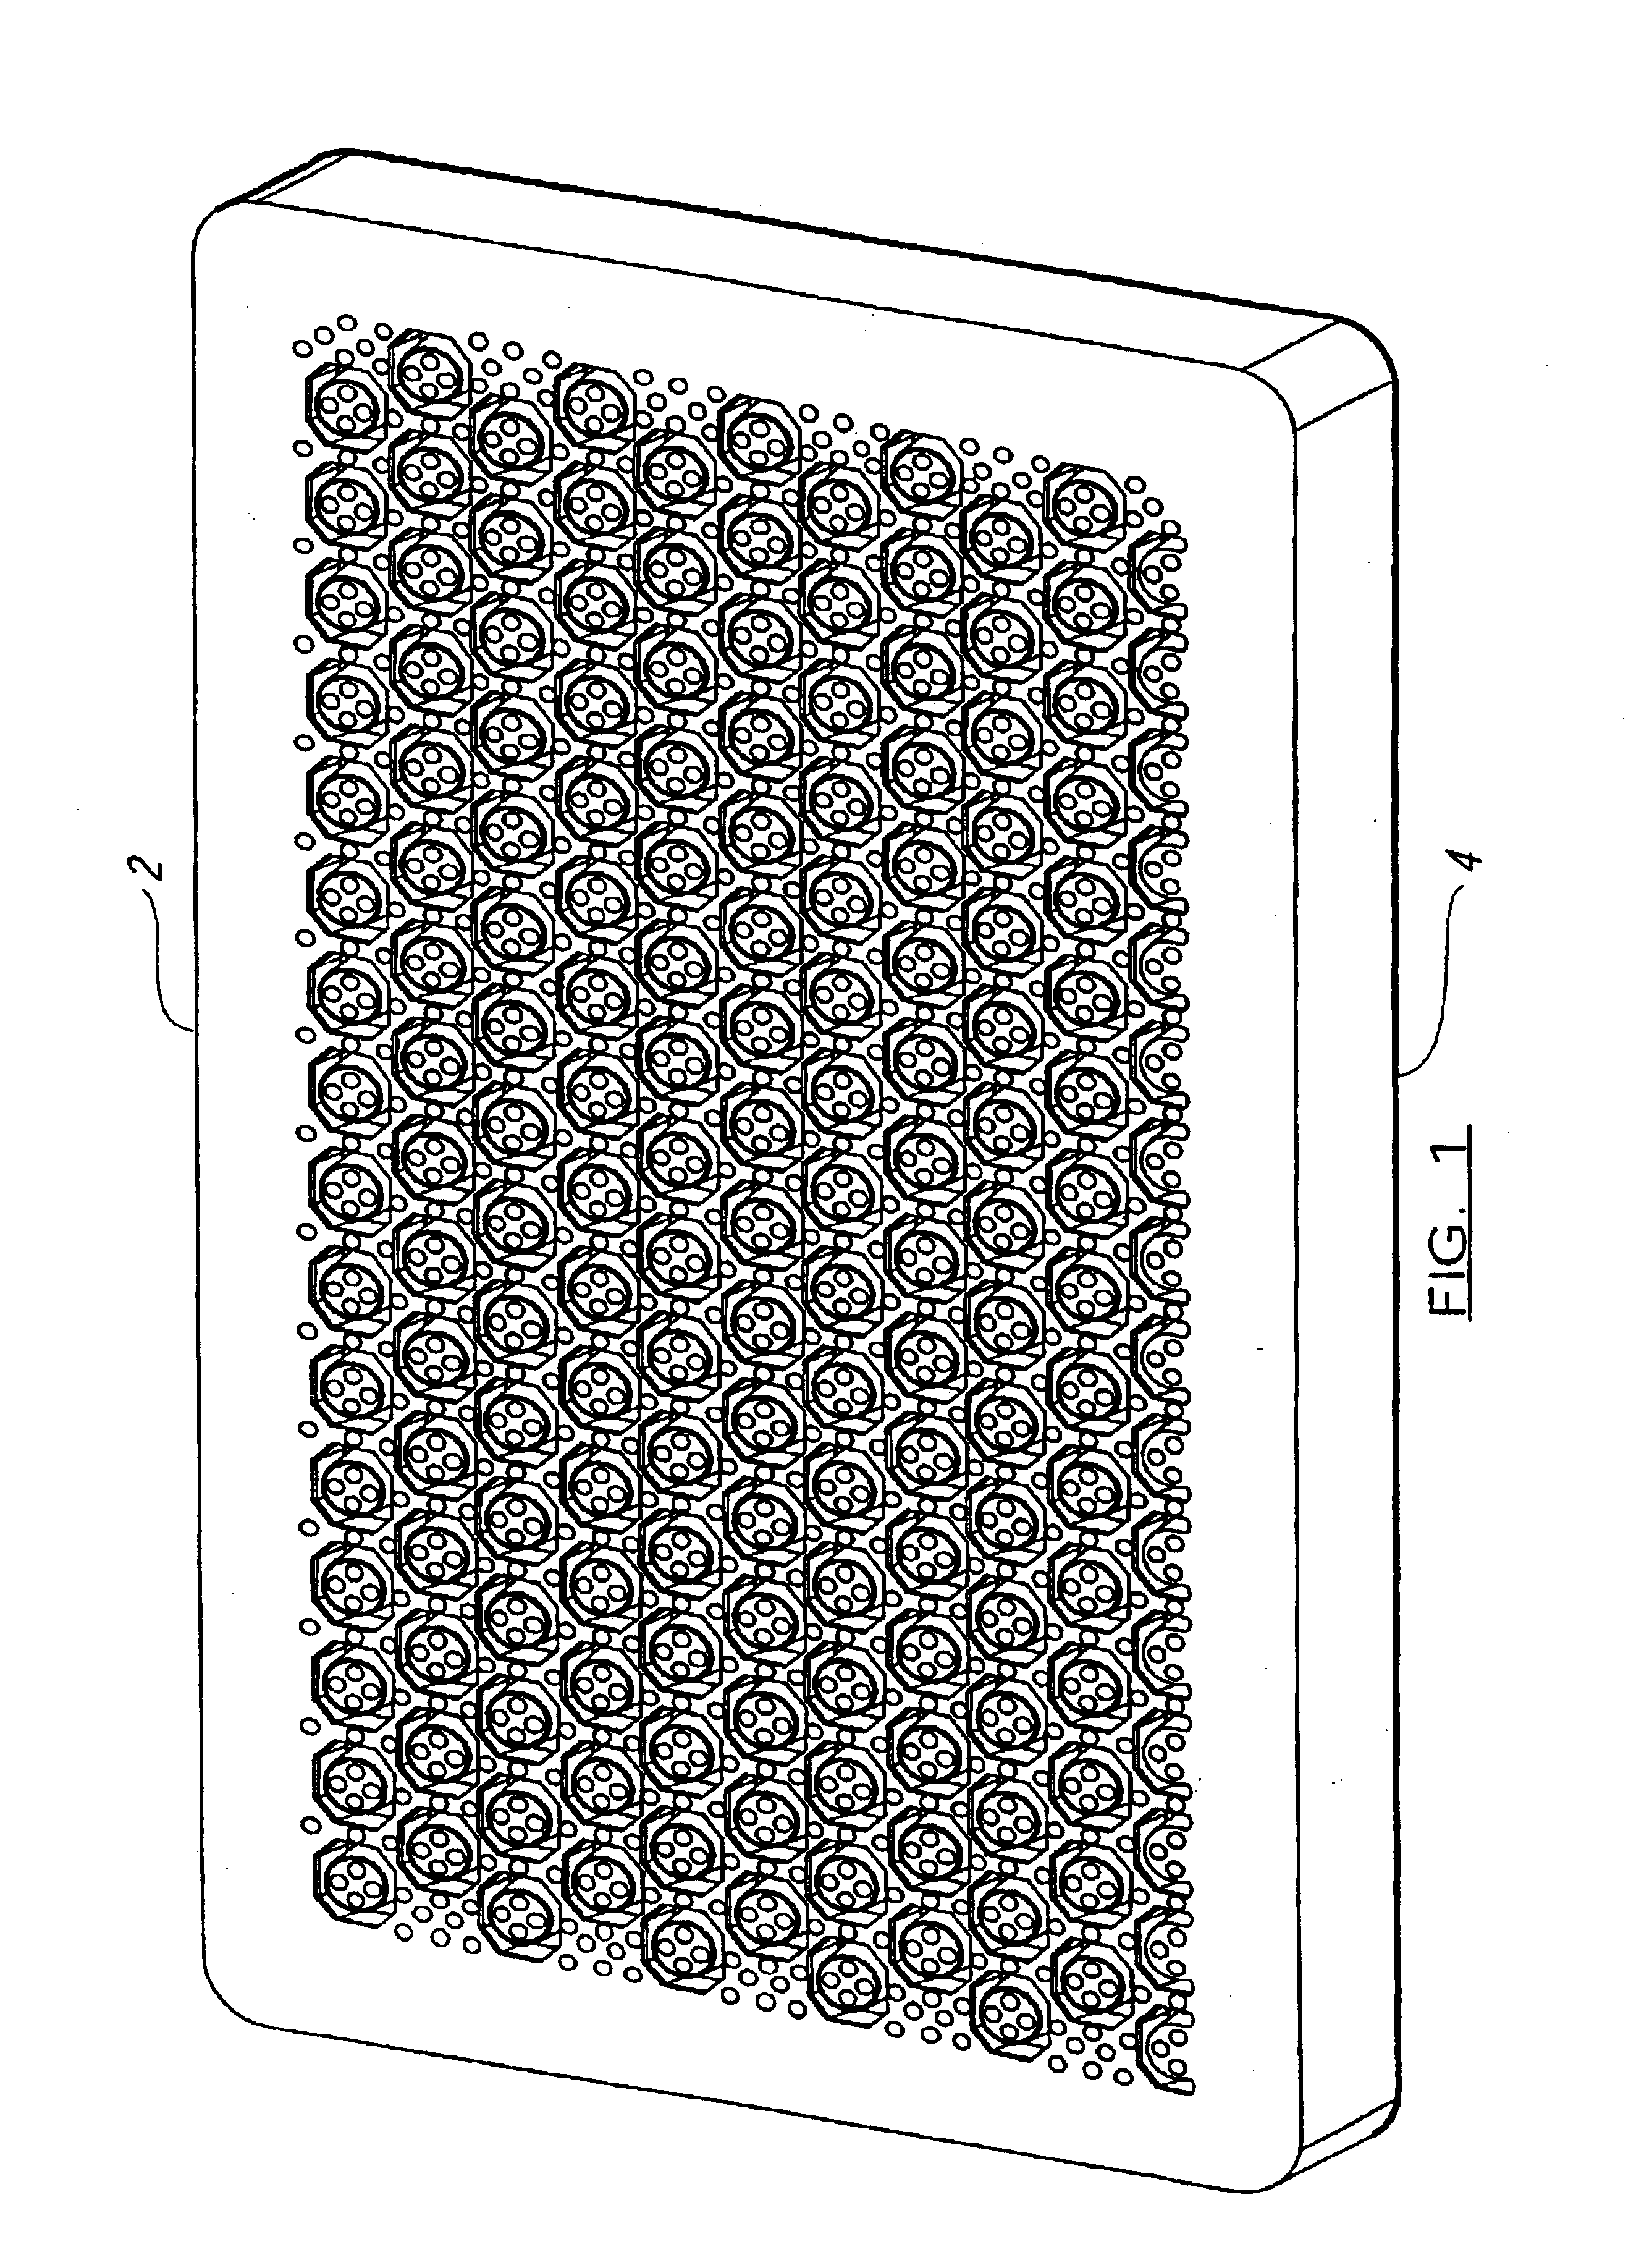 Burner plaque with continuous channels